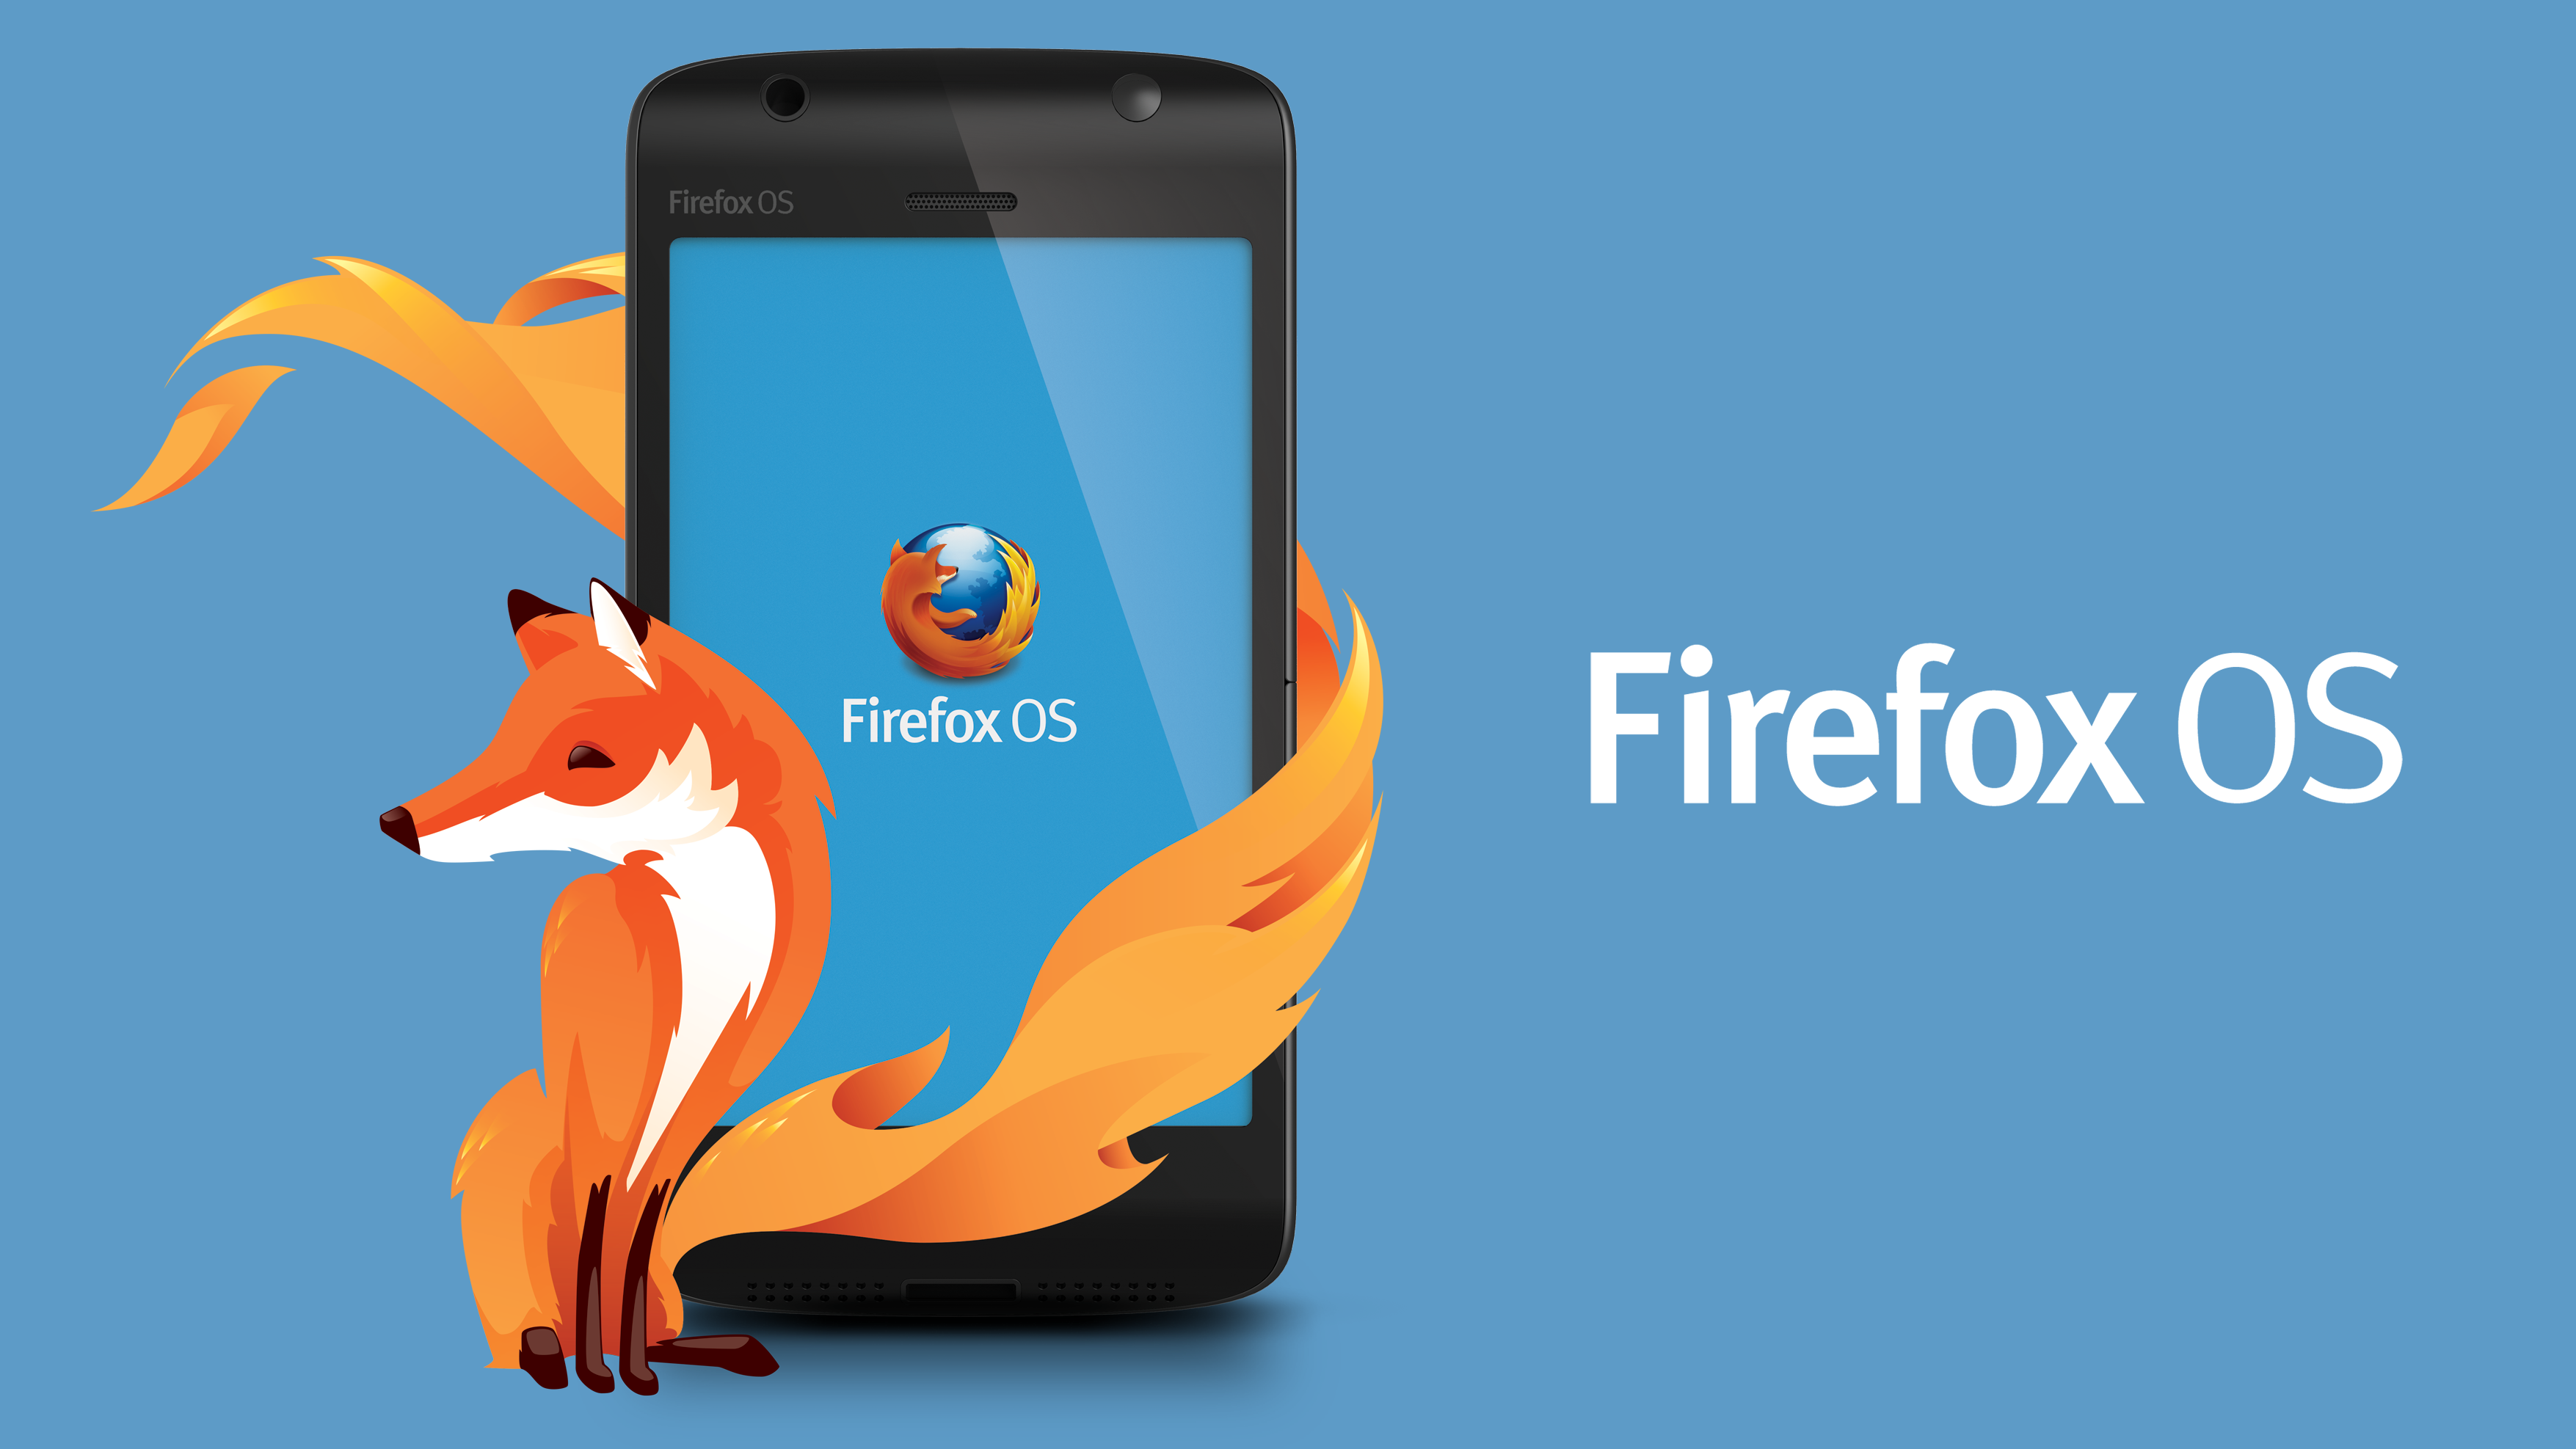 firefox_OS